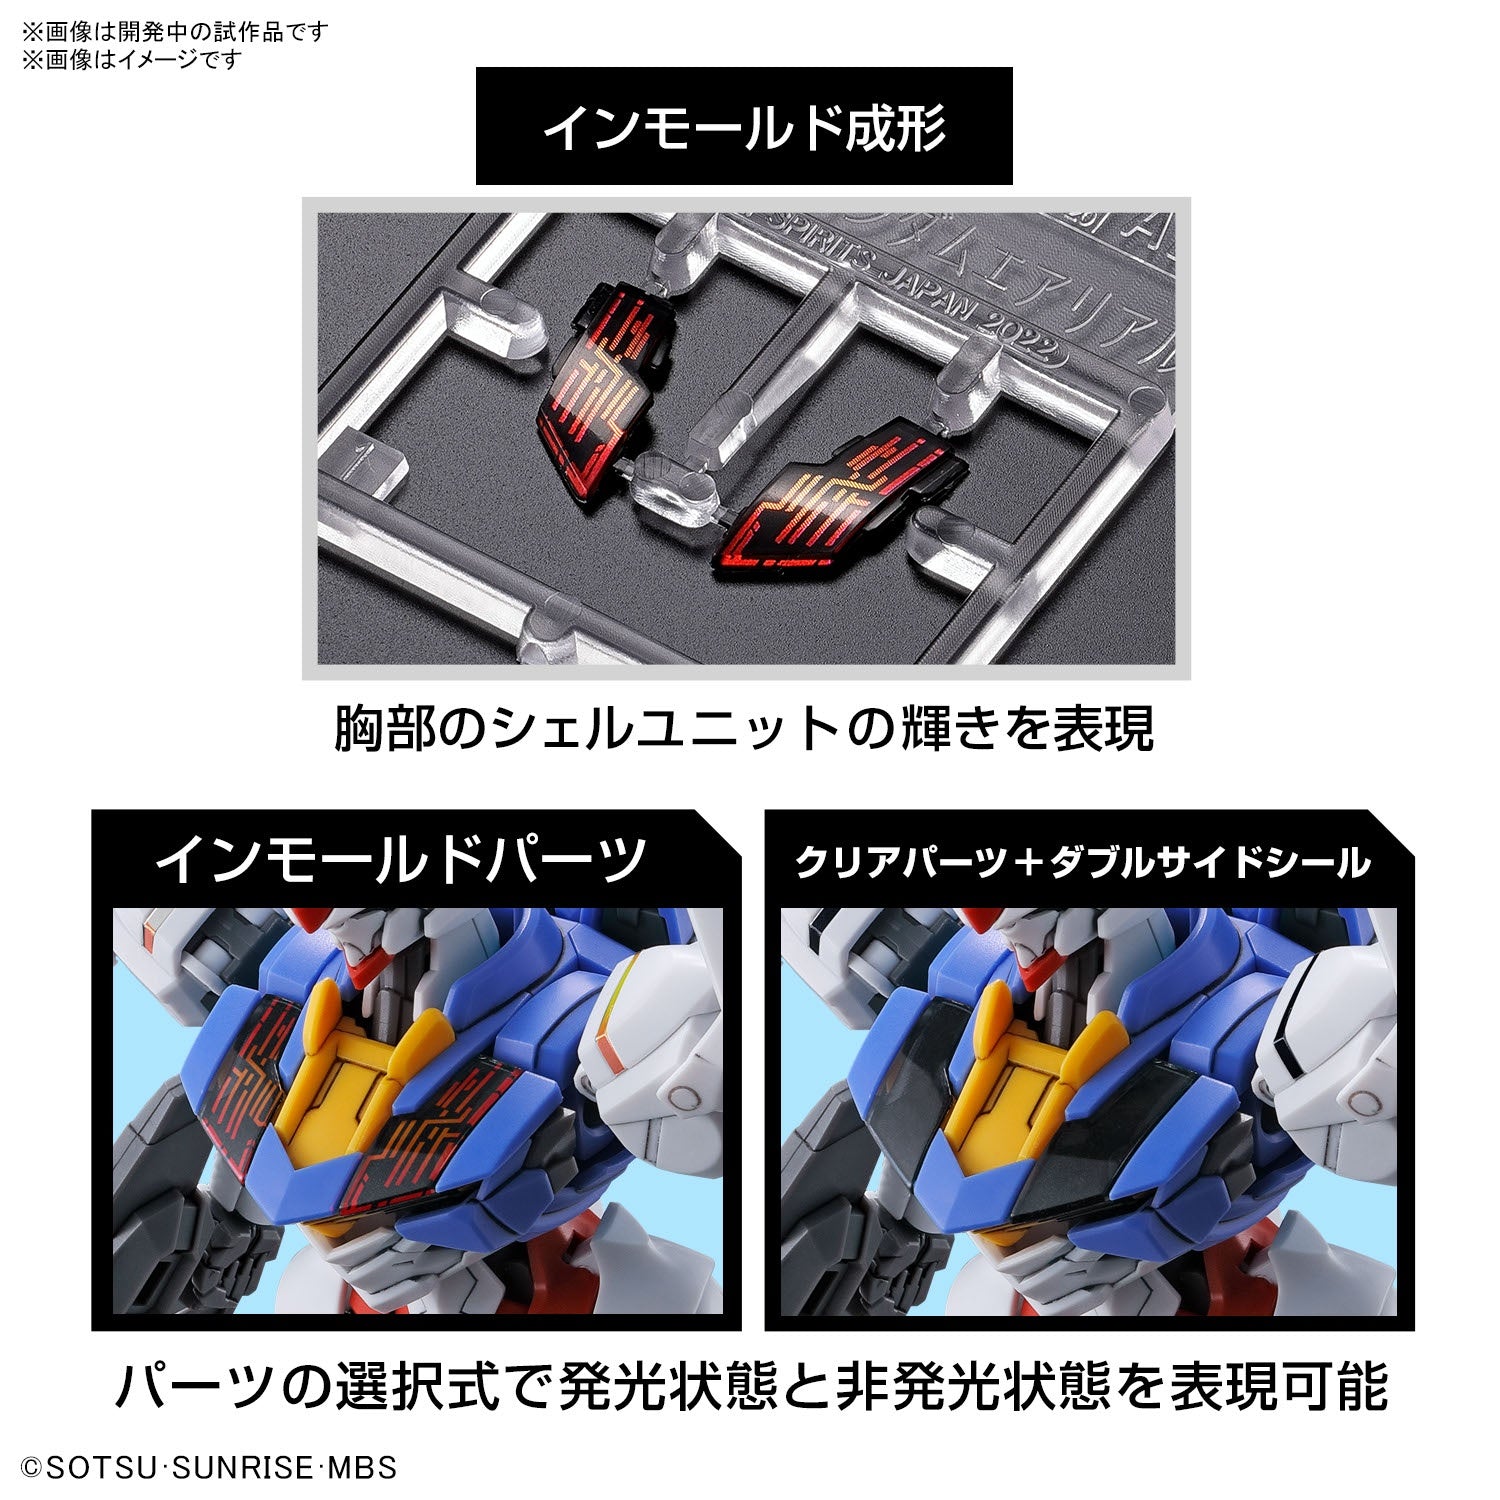 HGTWFM - XVX-016 Gundam Aerial